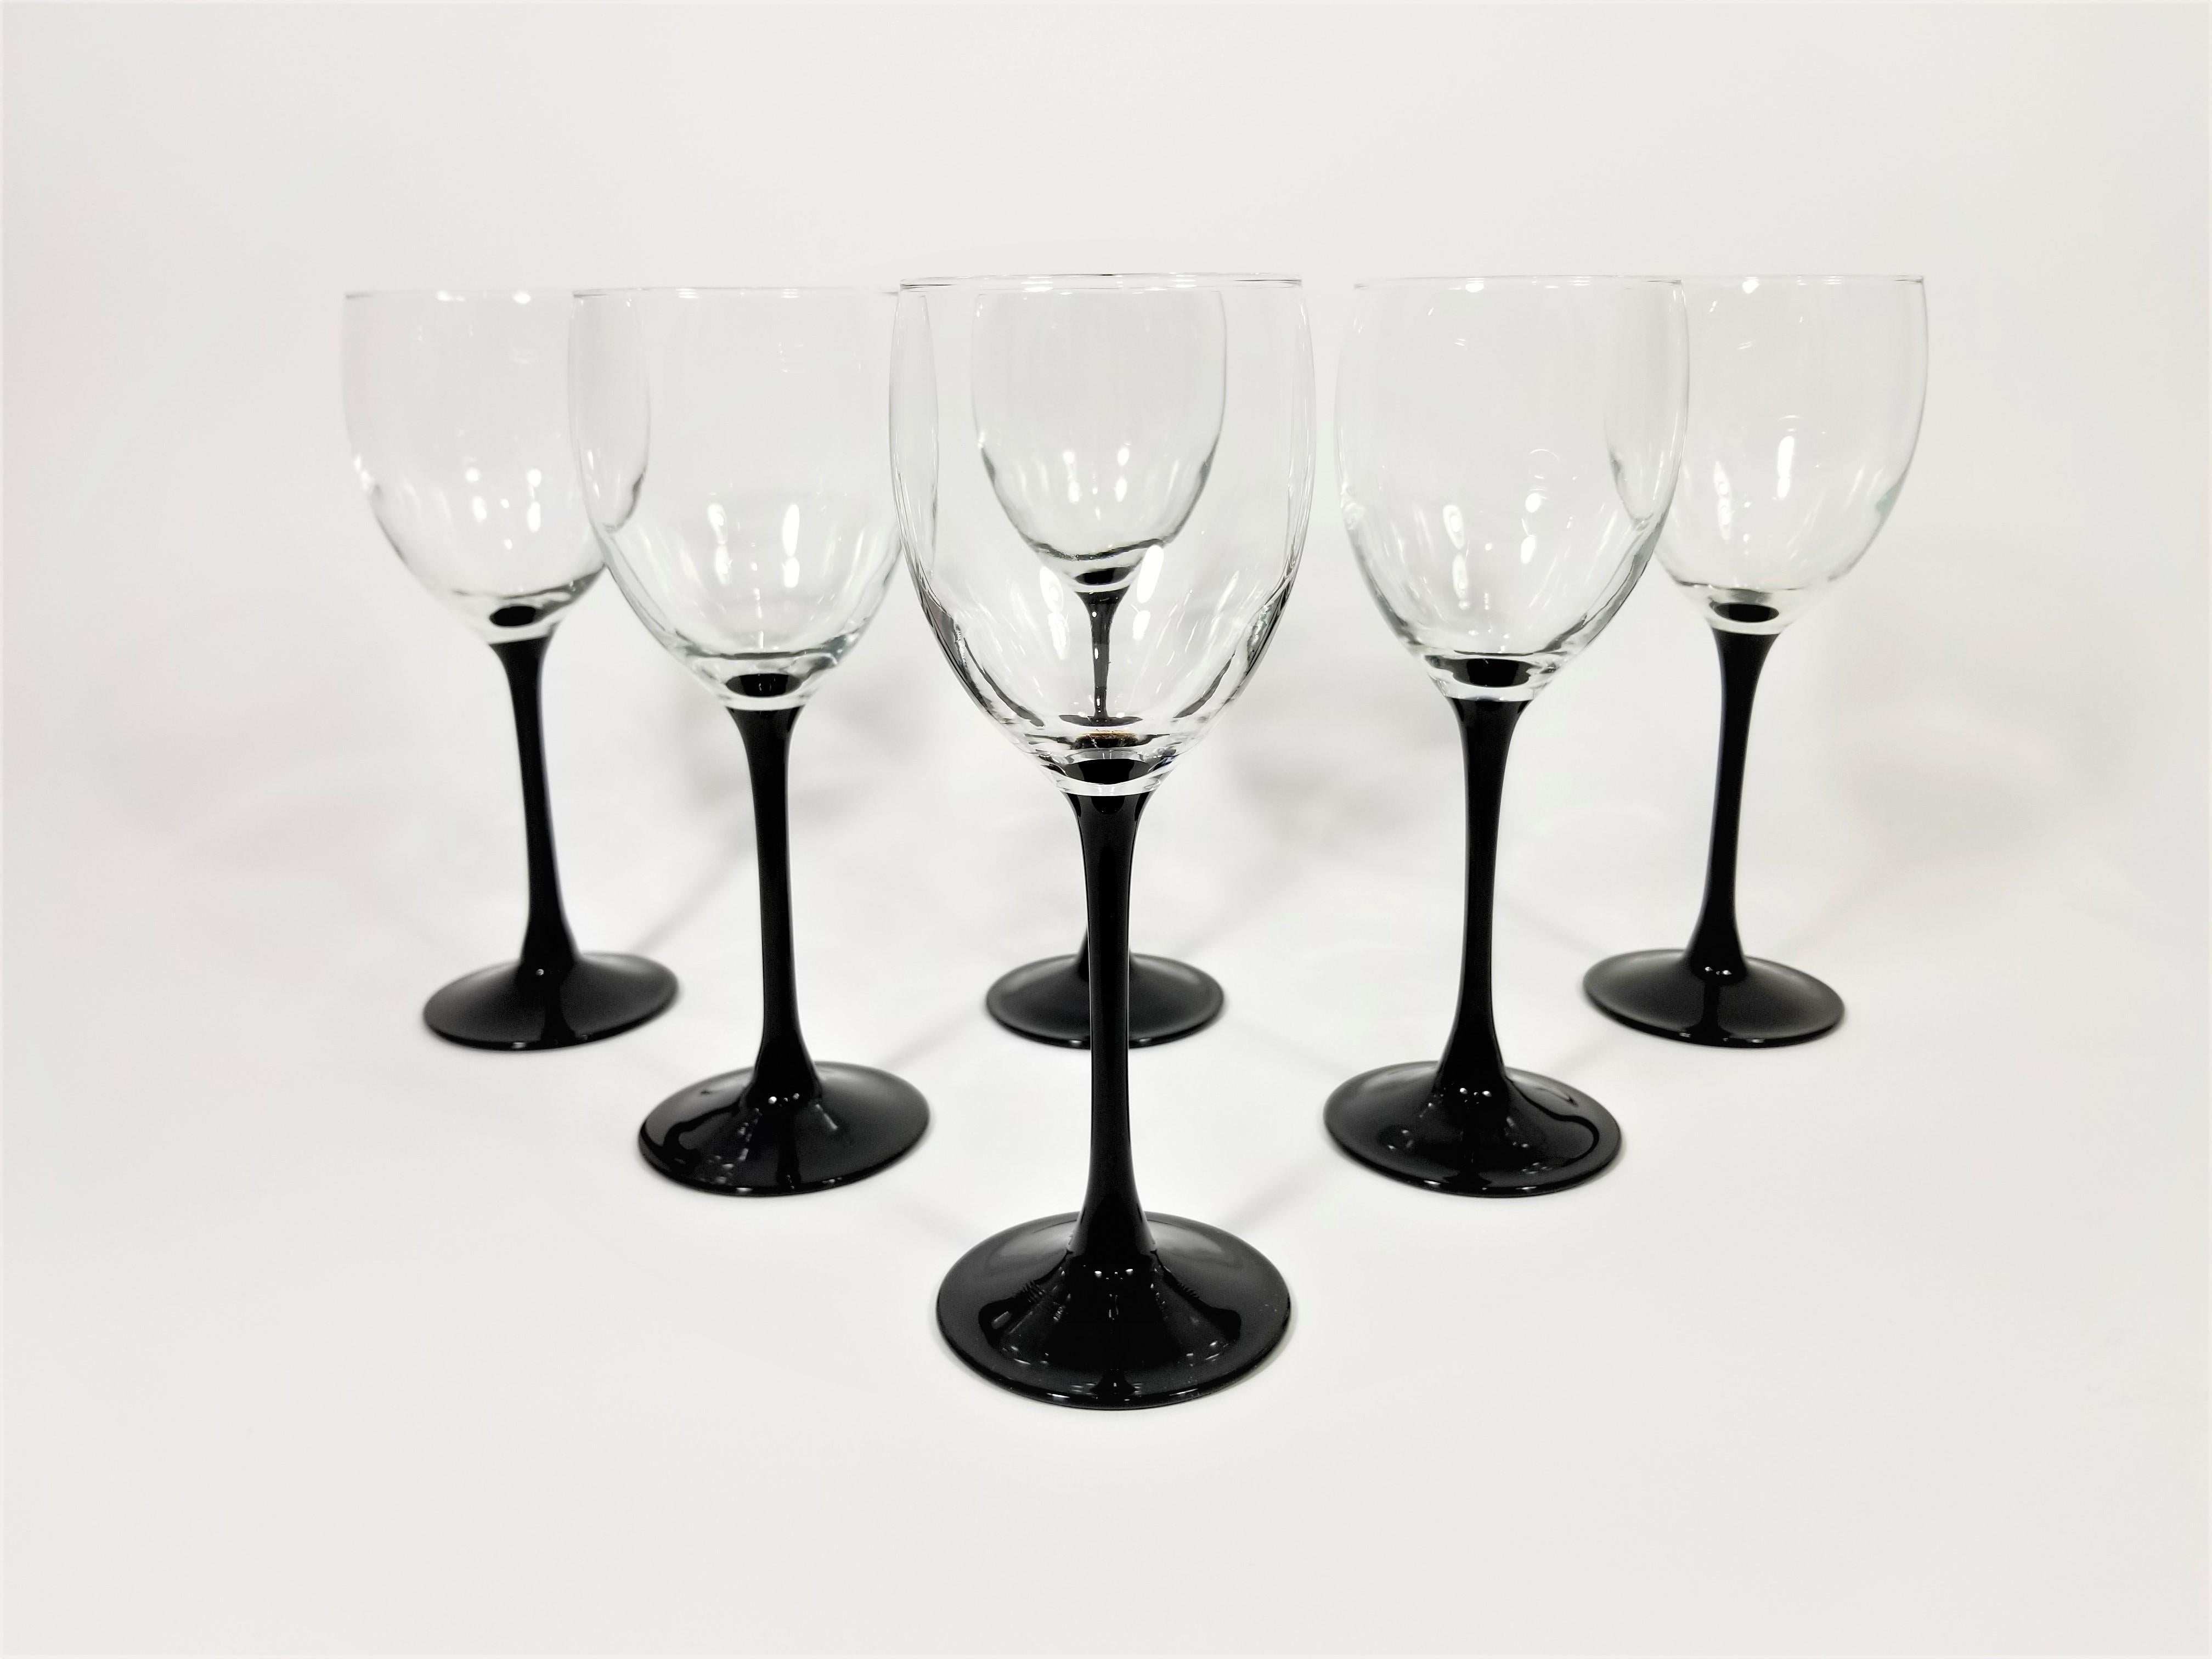 Set of 6 Midcentury 1970s 1980s black tulip base stemware / wine glasses / barware.
All glasses marked France.